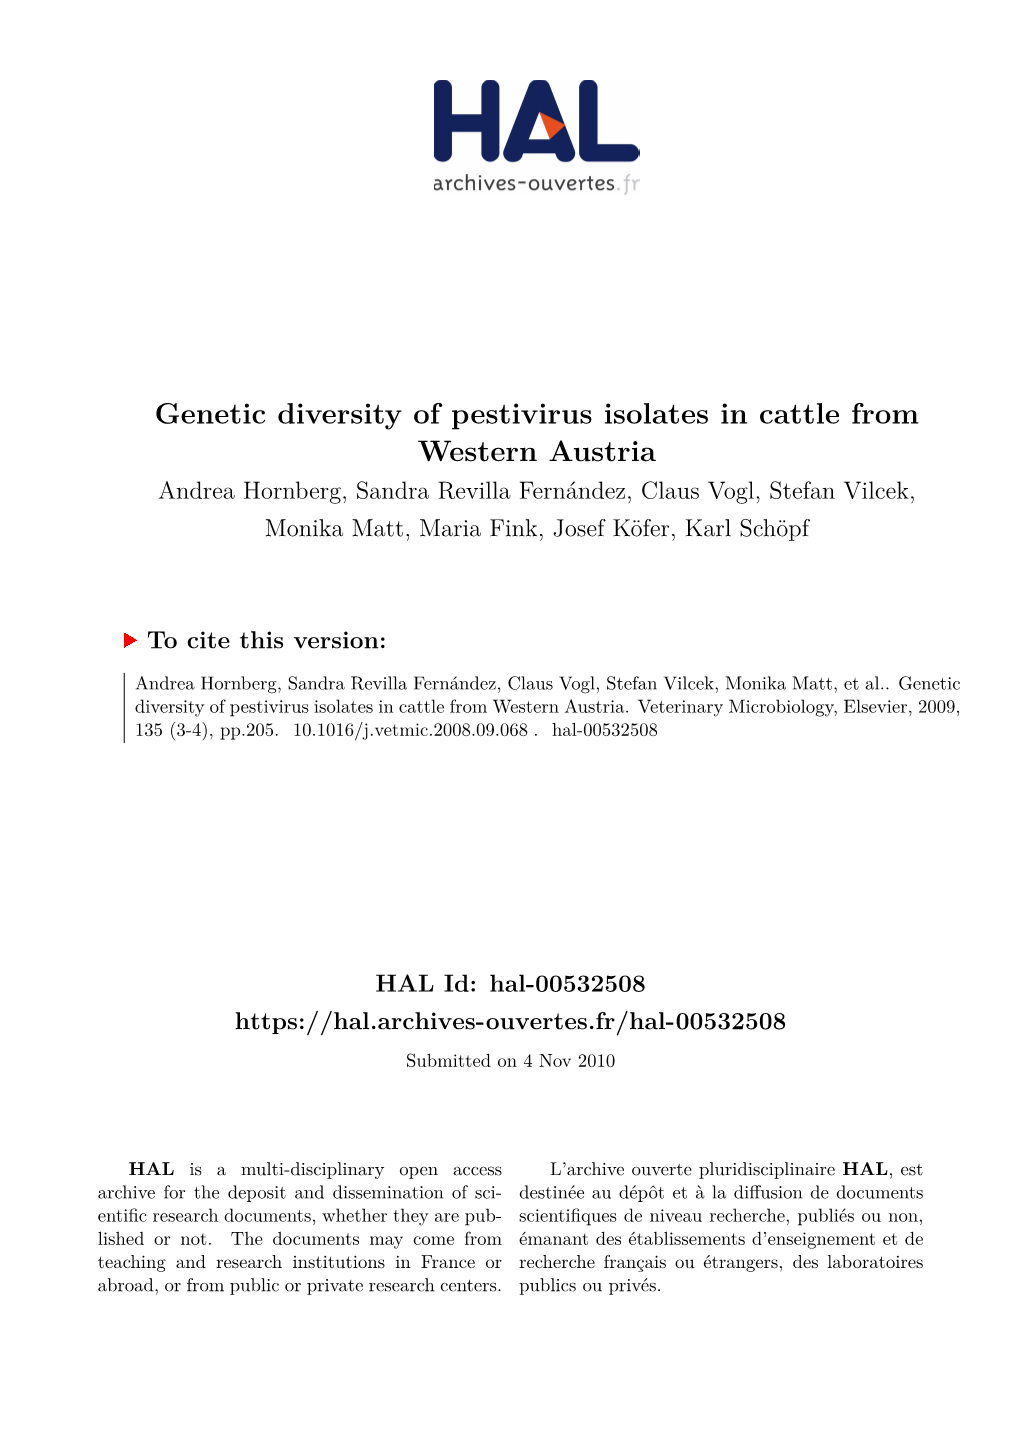 Genetic Diversity of Pestivirus Isolates in Cattle from Western Austria